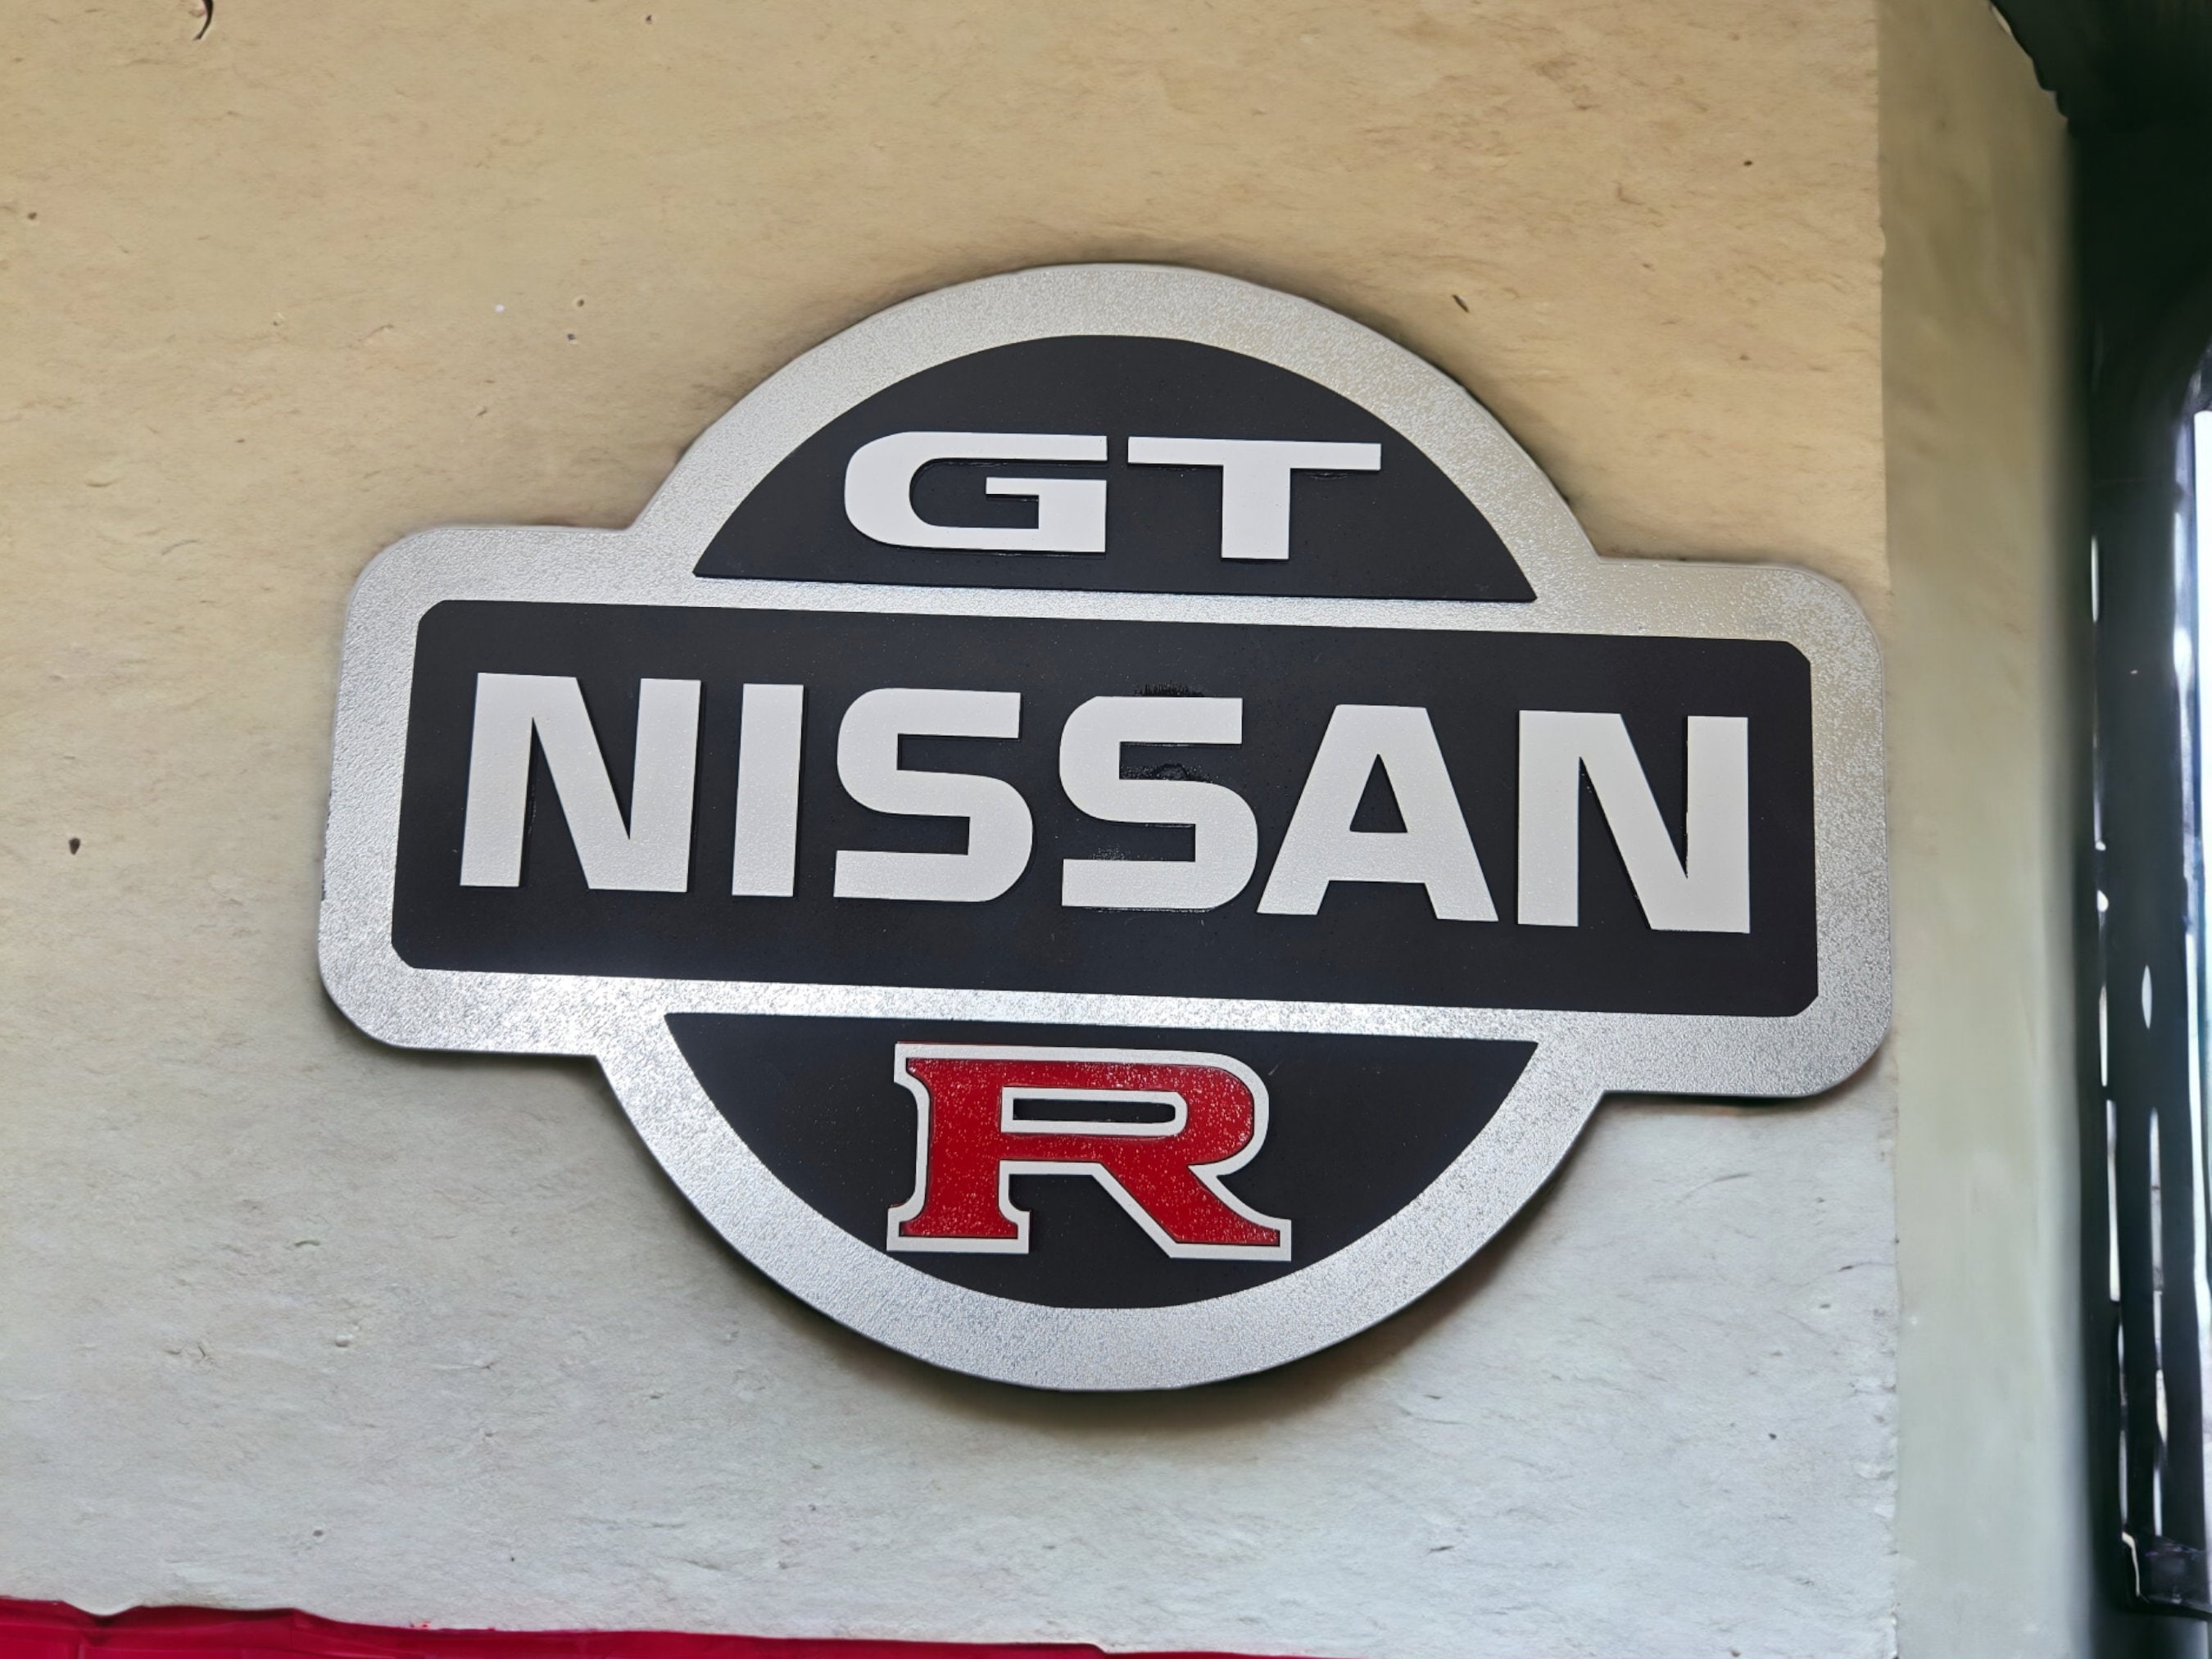 GTR car emblem car sticker badge sticker sign metal